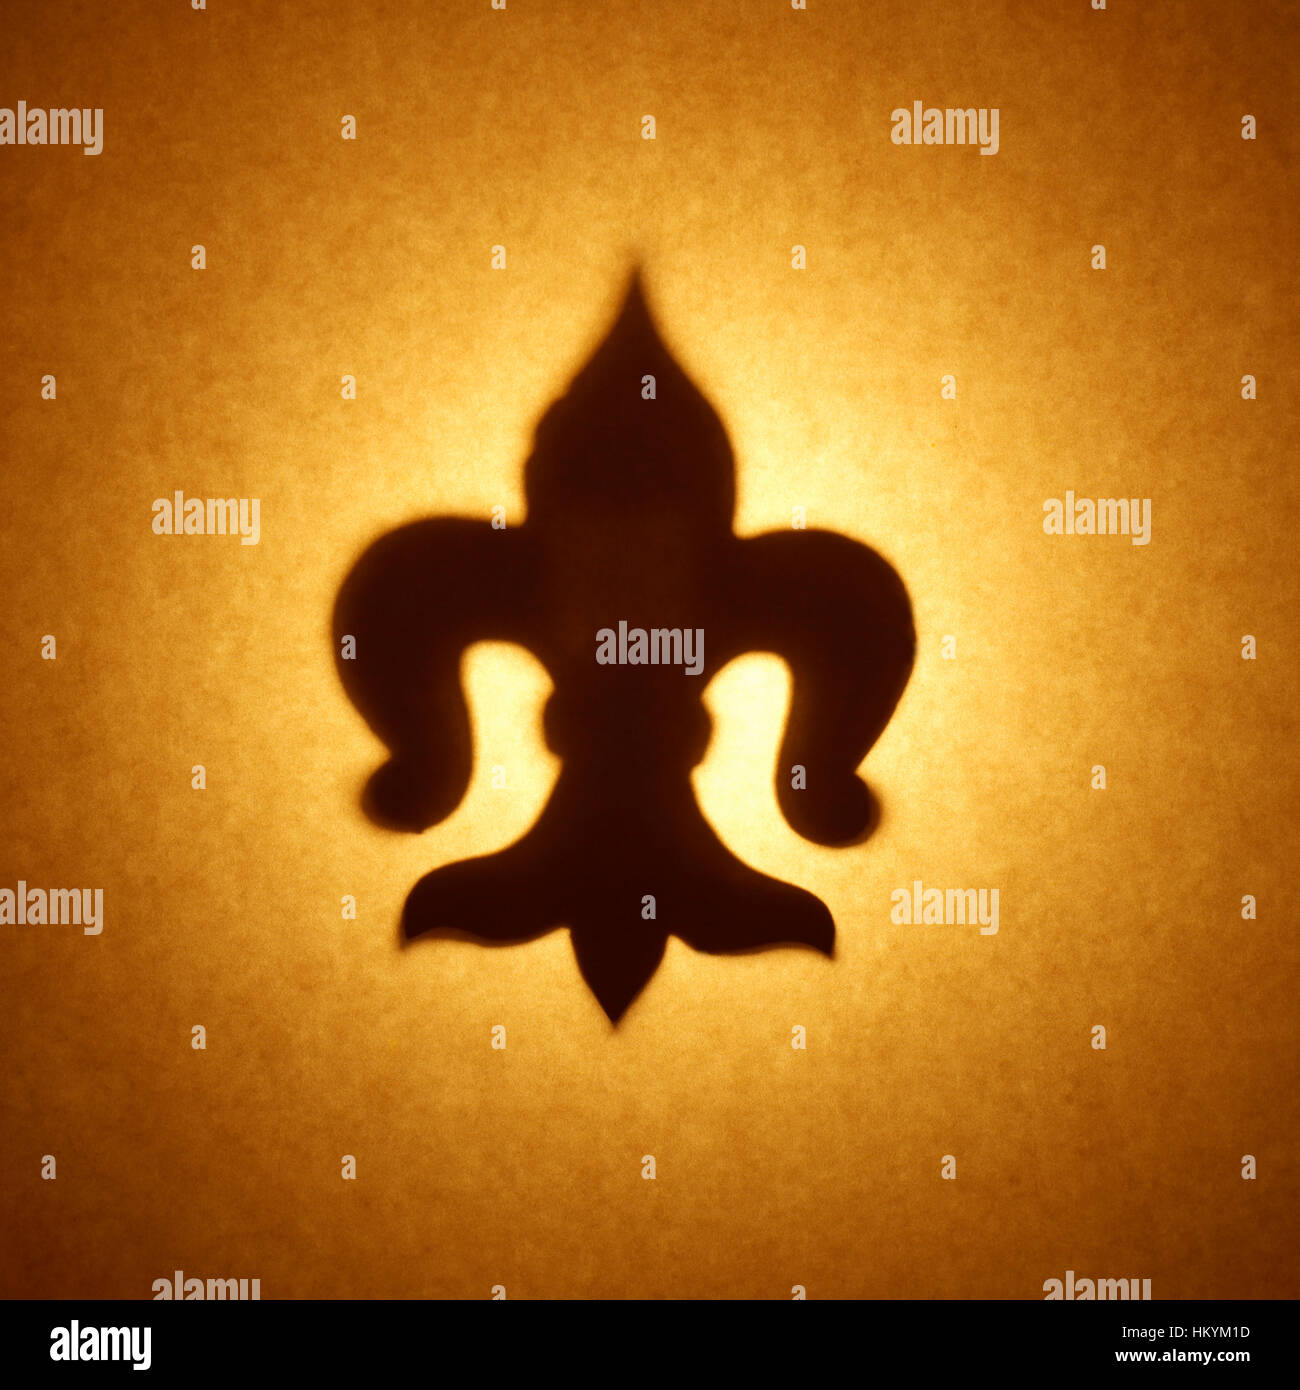 Beleuchtete Silhouette des Fleur Form ausgeschnitten gegen Braunton Papier mit spot-Highlight. Stockfoto